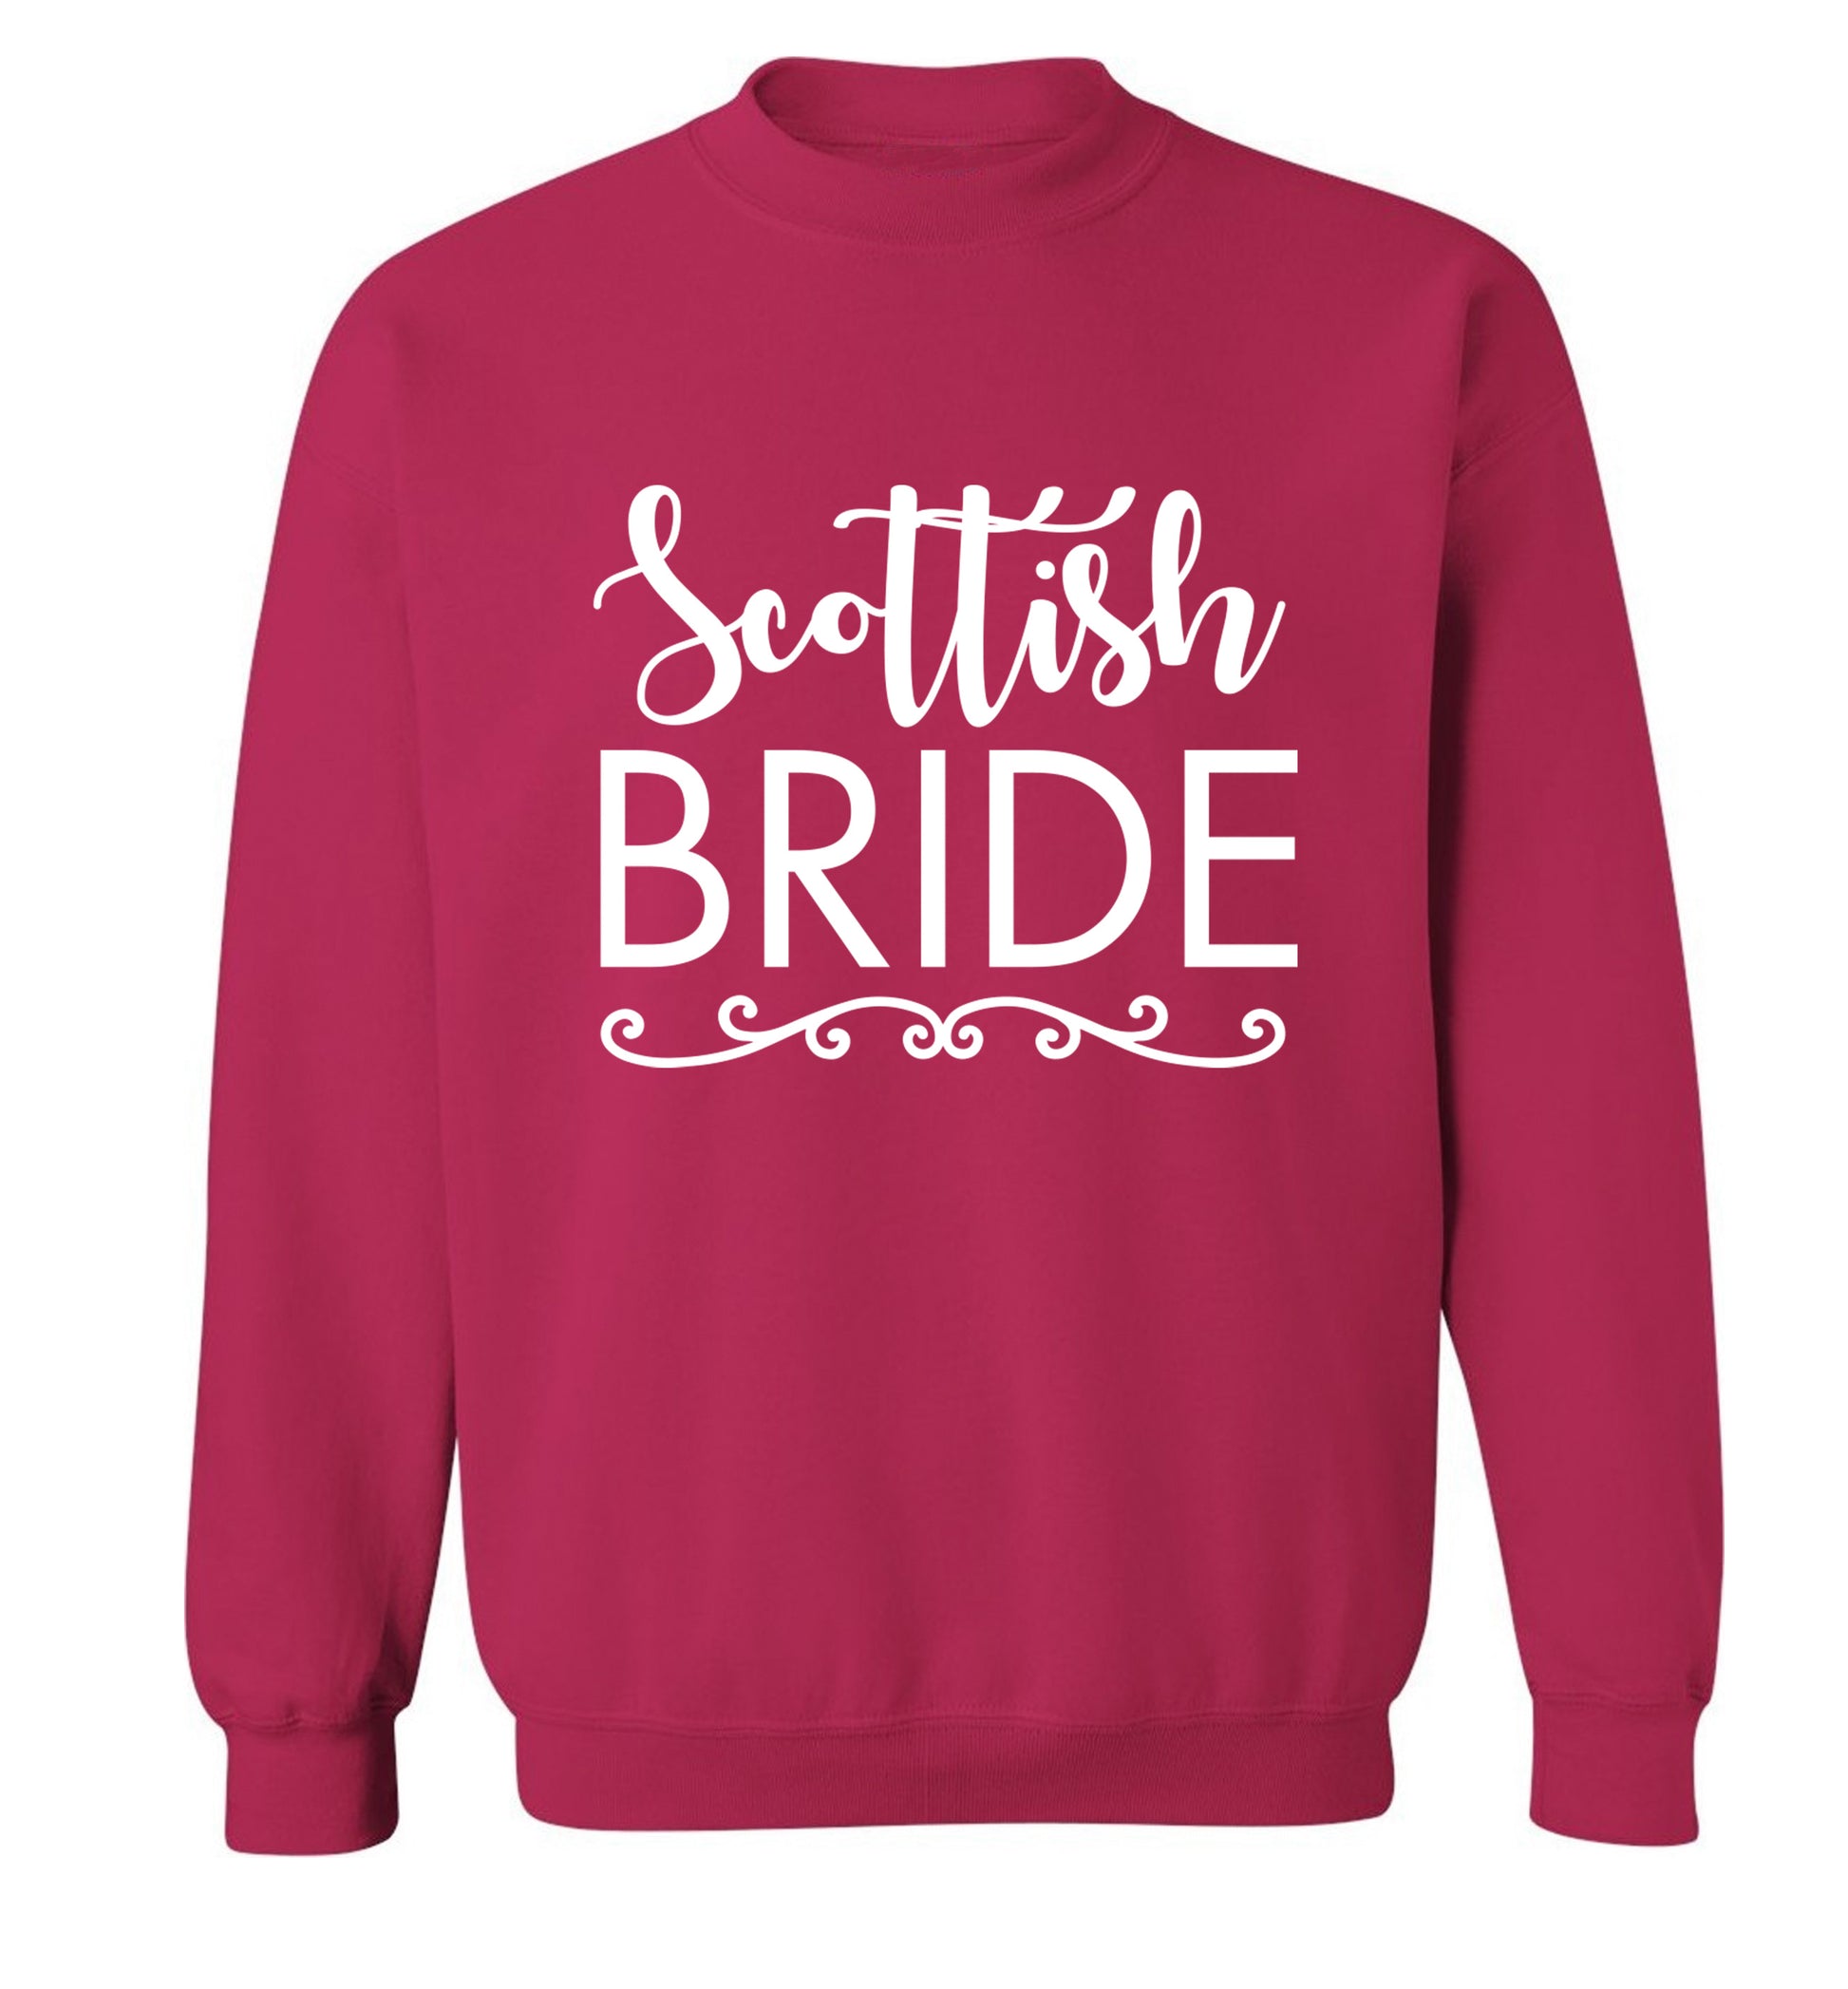 Scottish Bride Adult's unisex pink Sweater 2XL